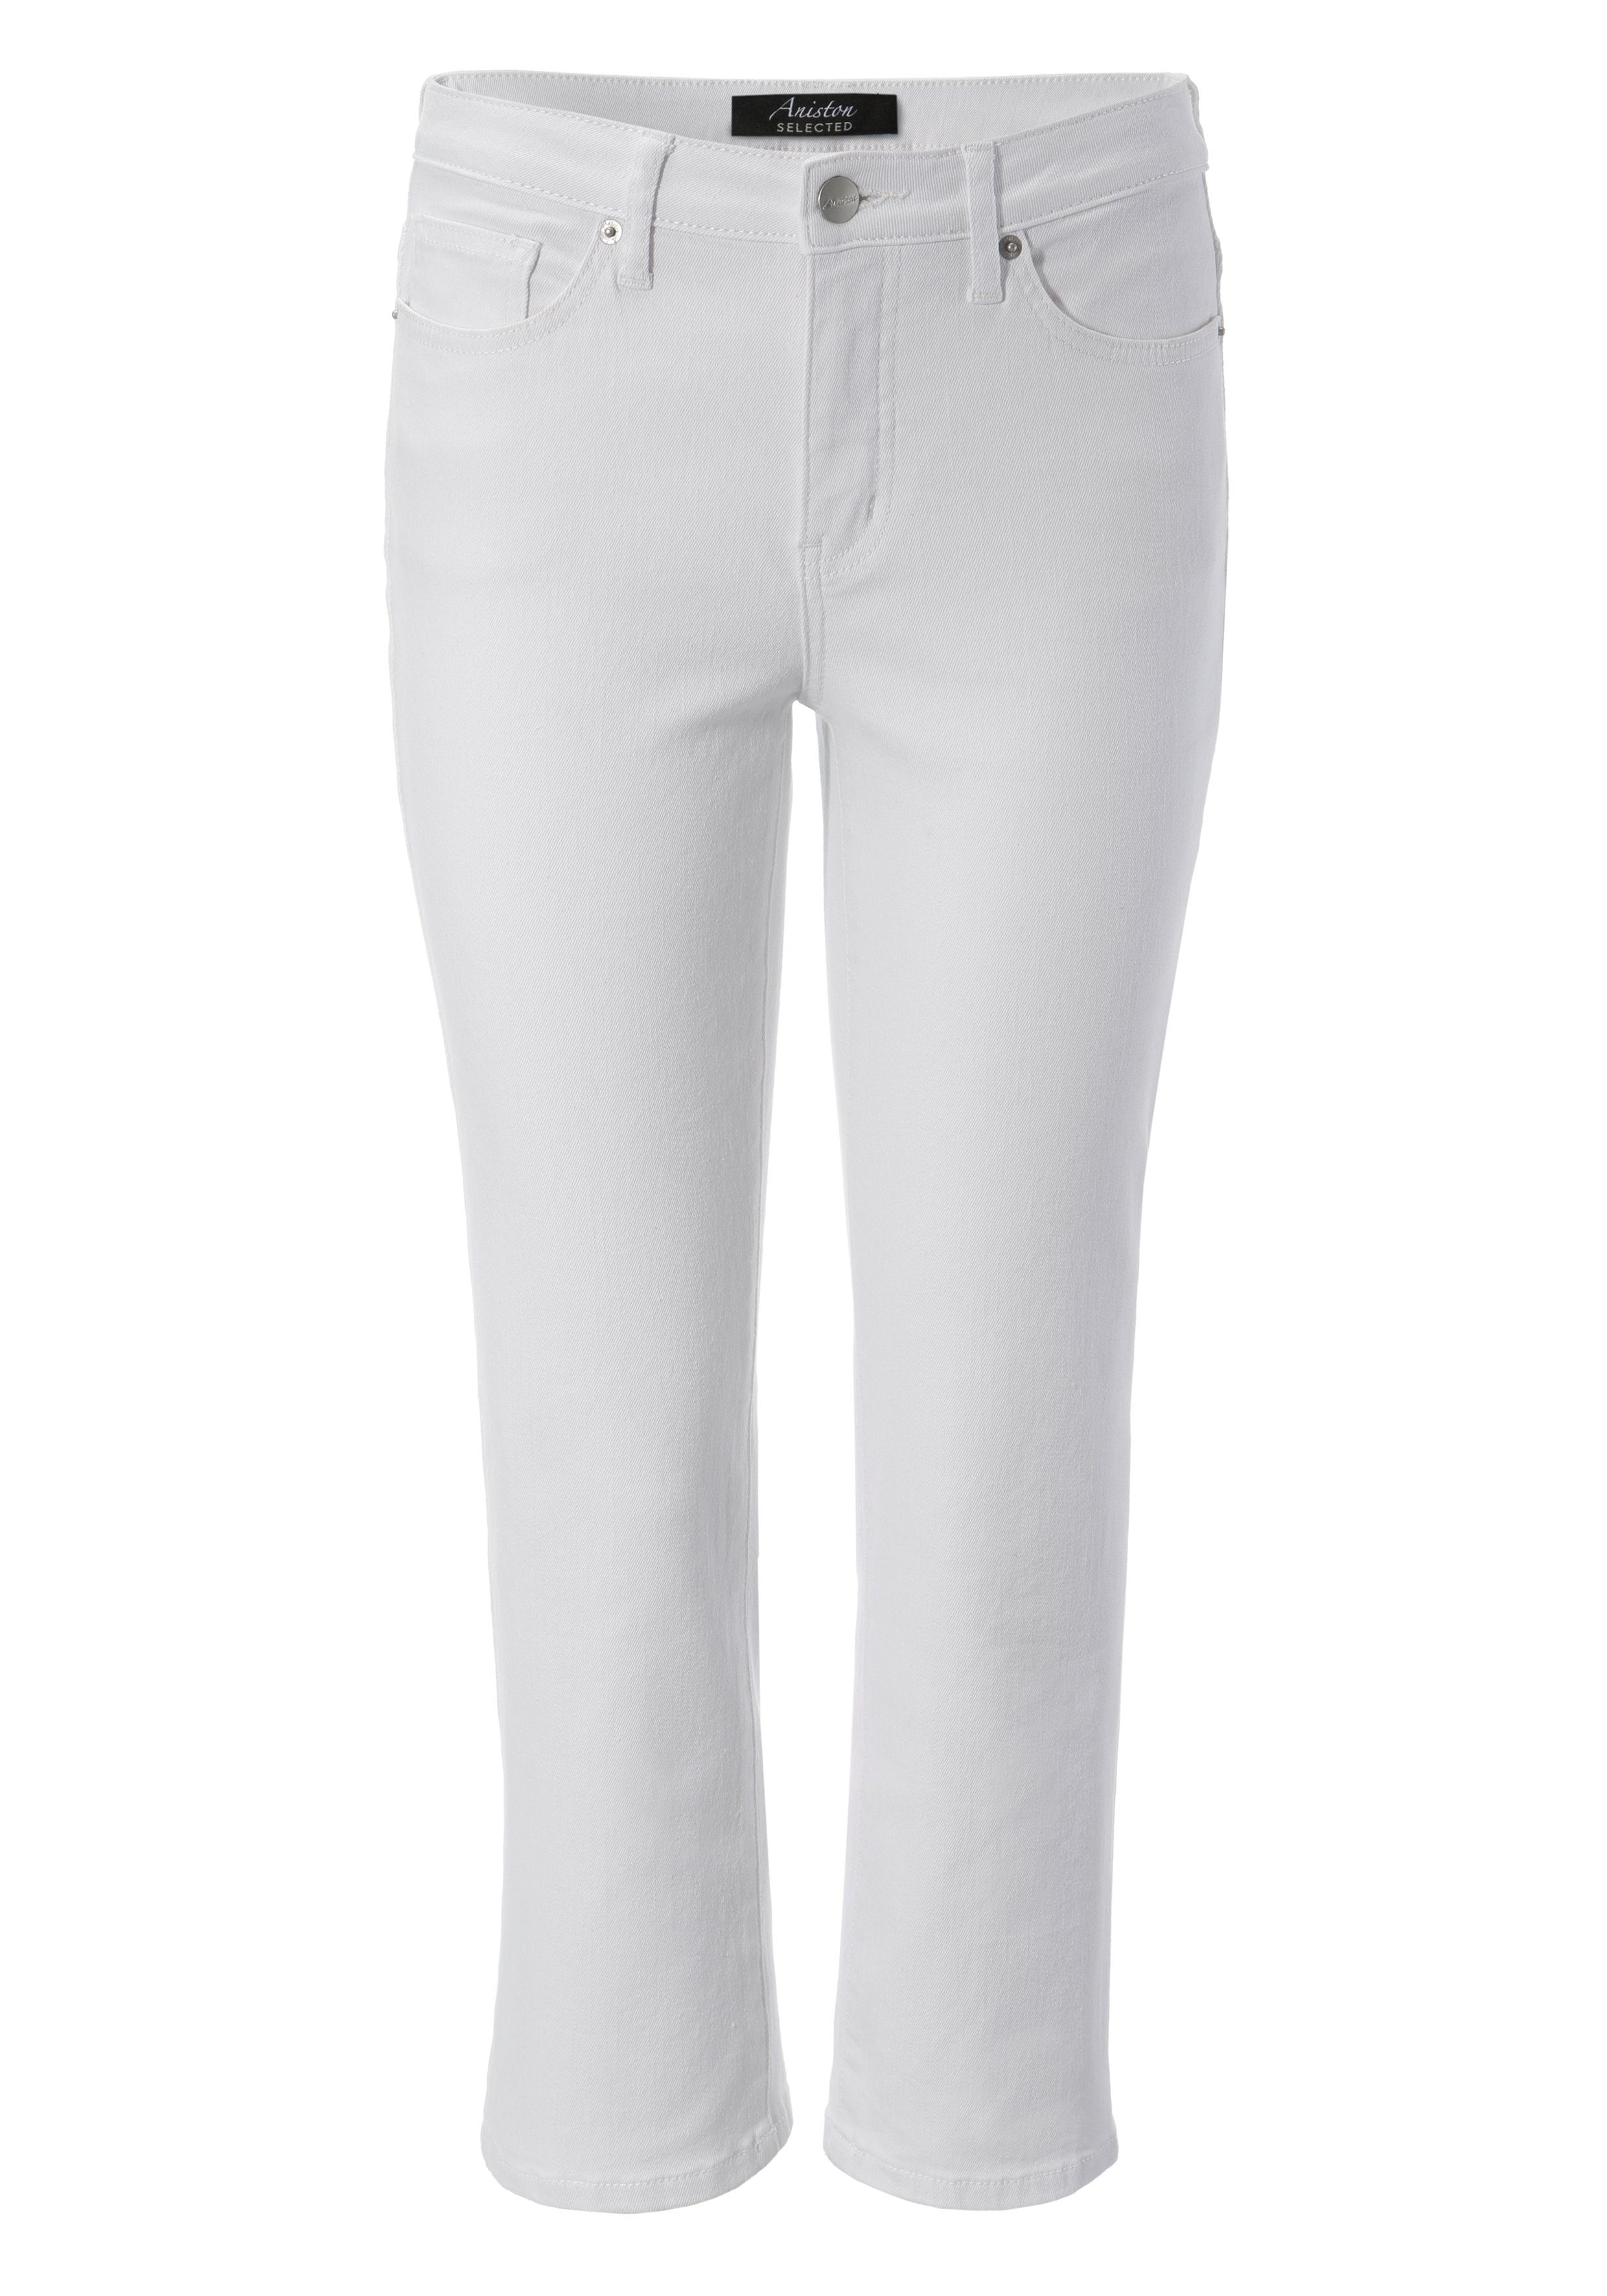 Aniston SELECTED Straight-Jeans in verkürzter Länge cropped weiß